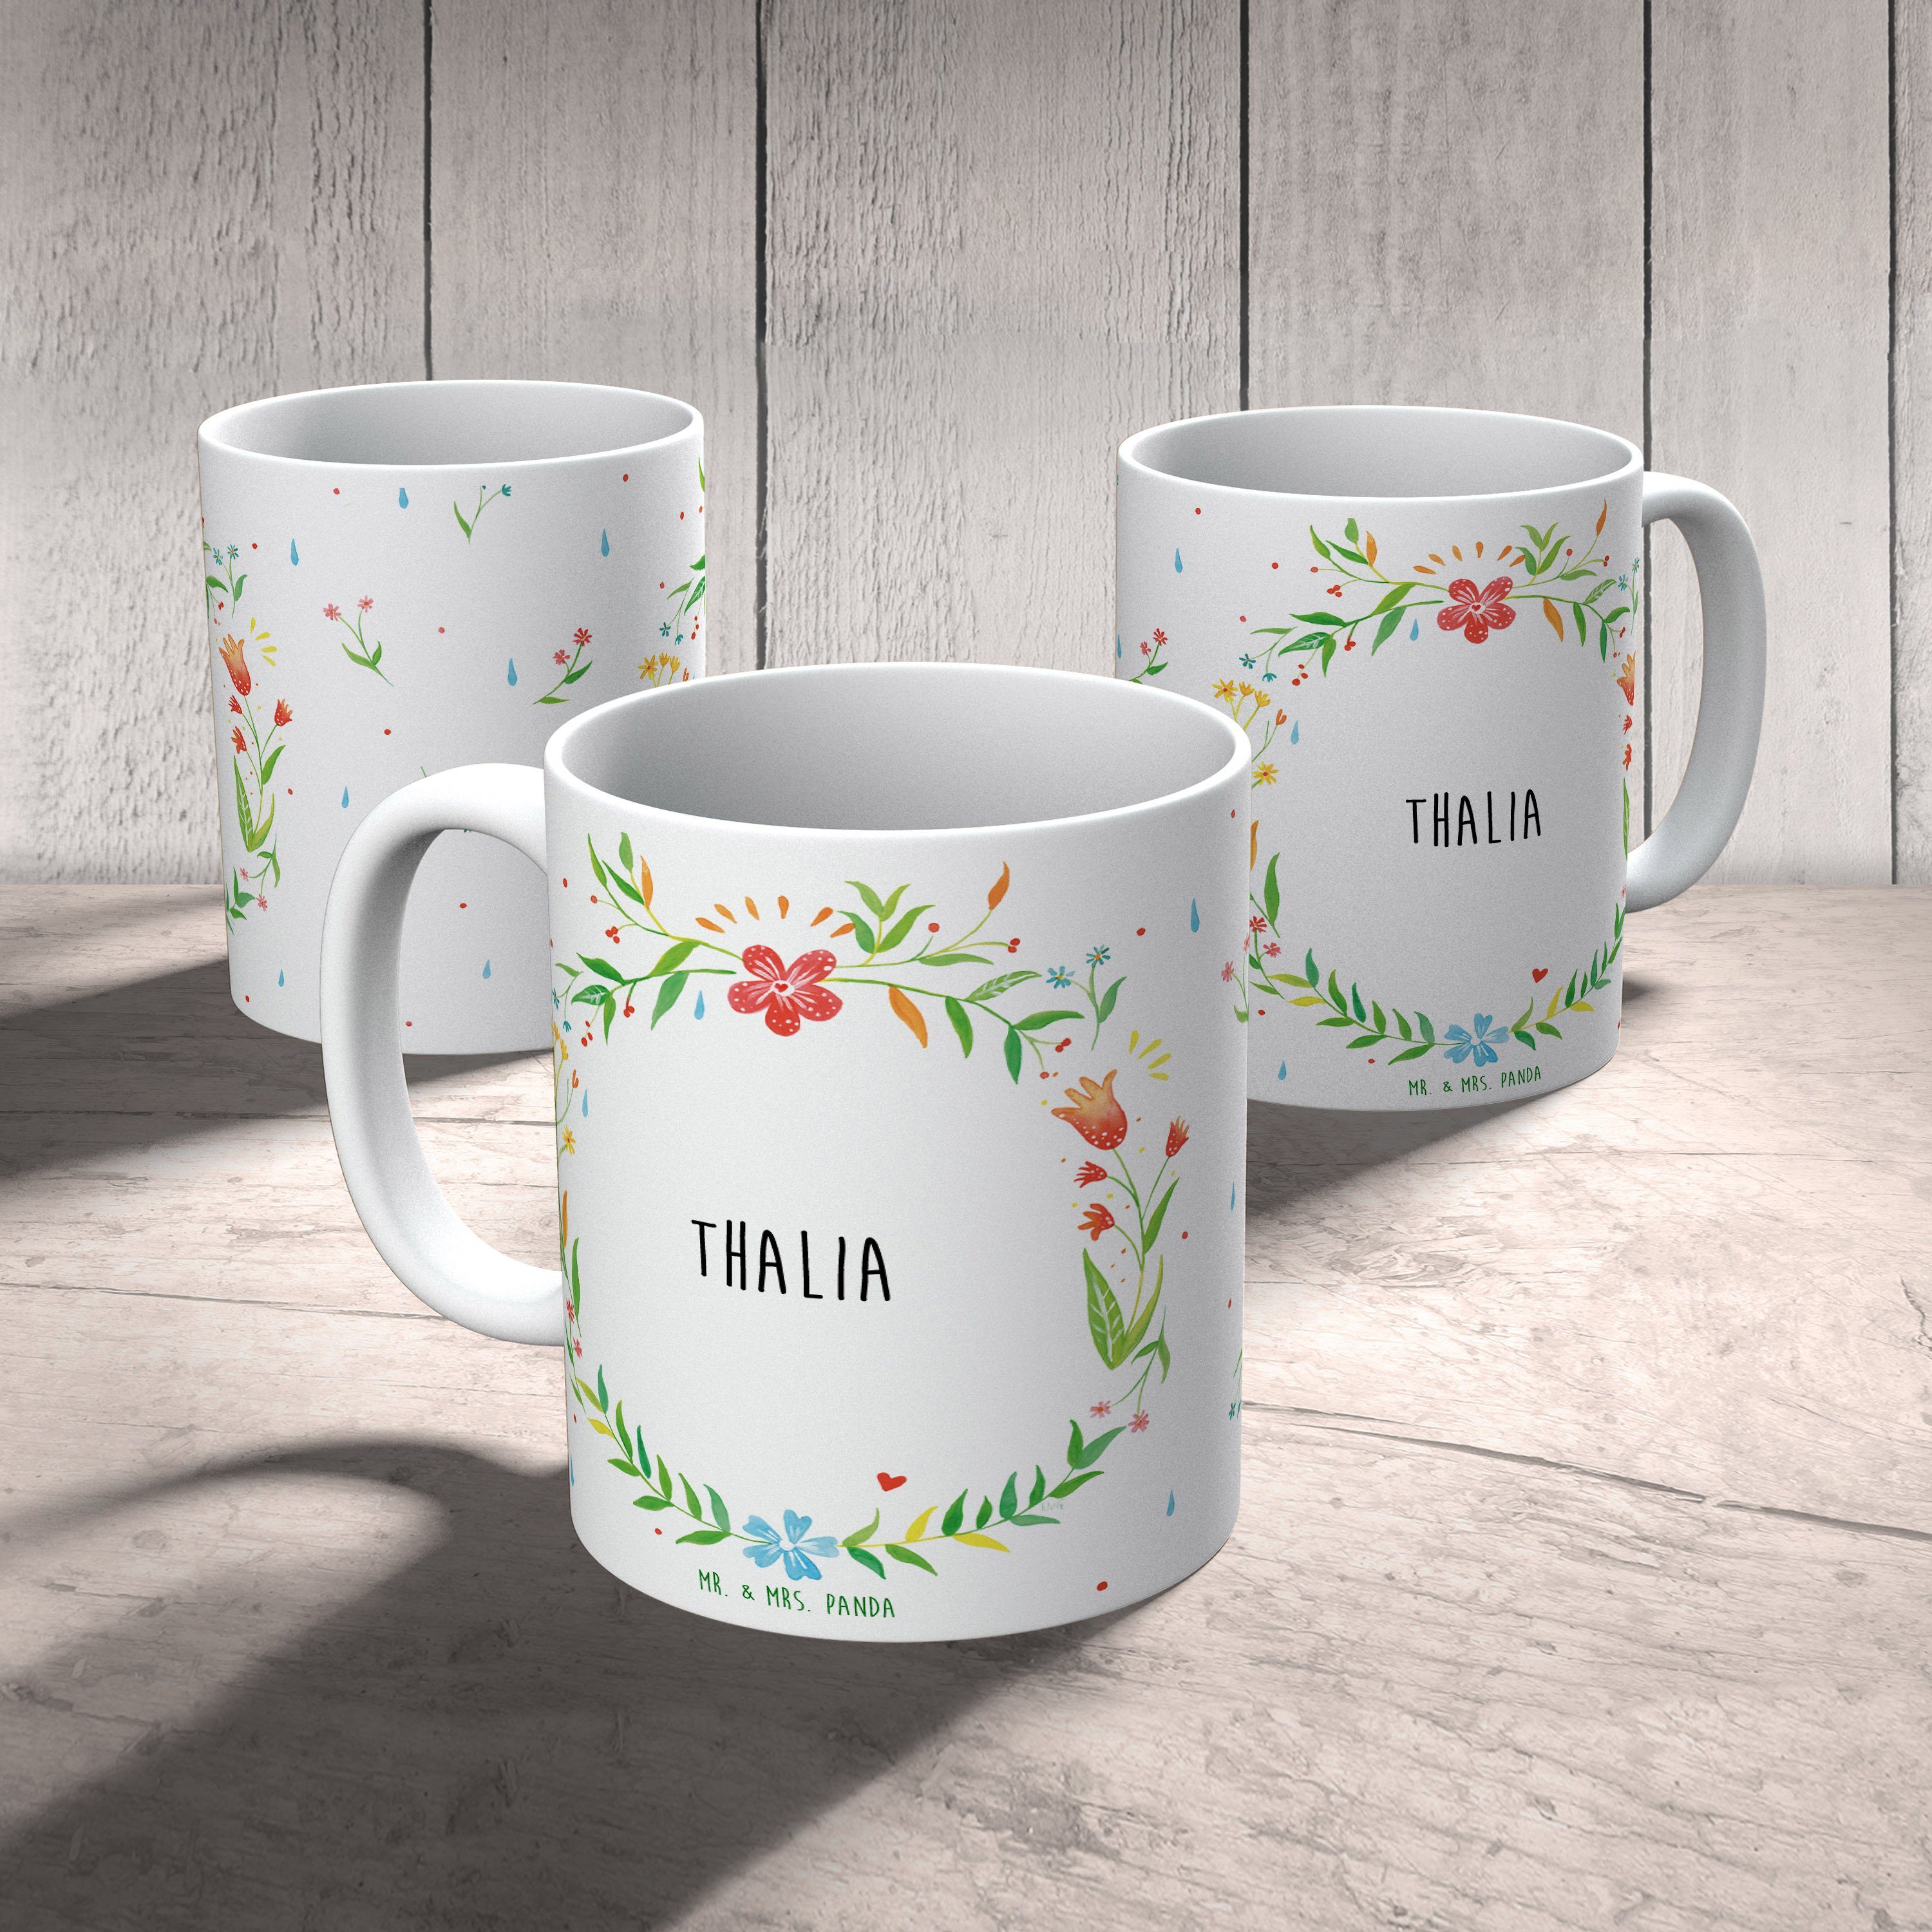 - Thalia Mr. Panda Tasse, Tasse Po, Kaffeetasse, & Keramik Tasse Geschenk, Keramiktasse, Motive, Mrs.